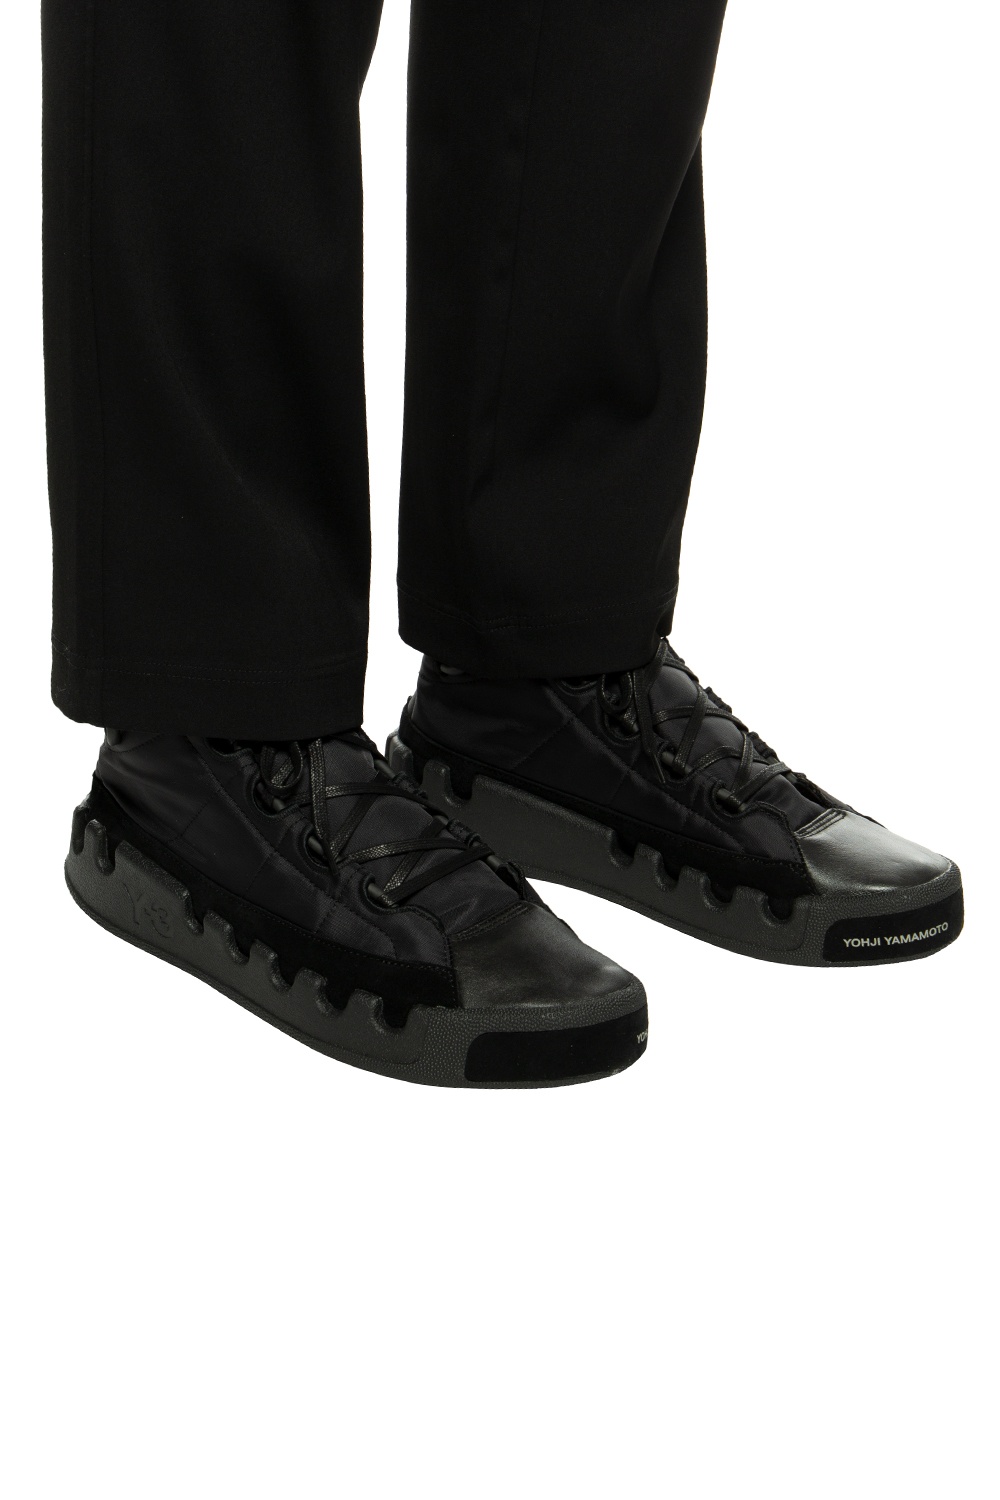 y3 black shoes